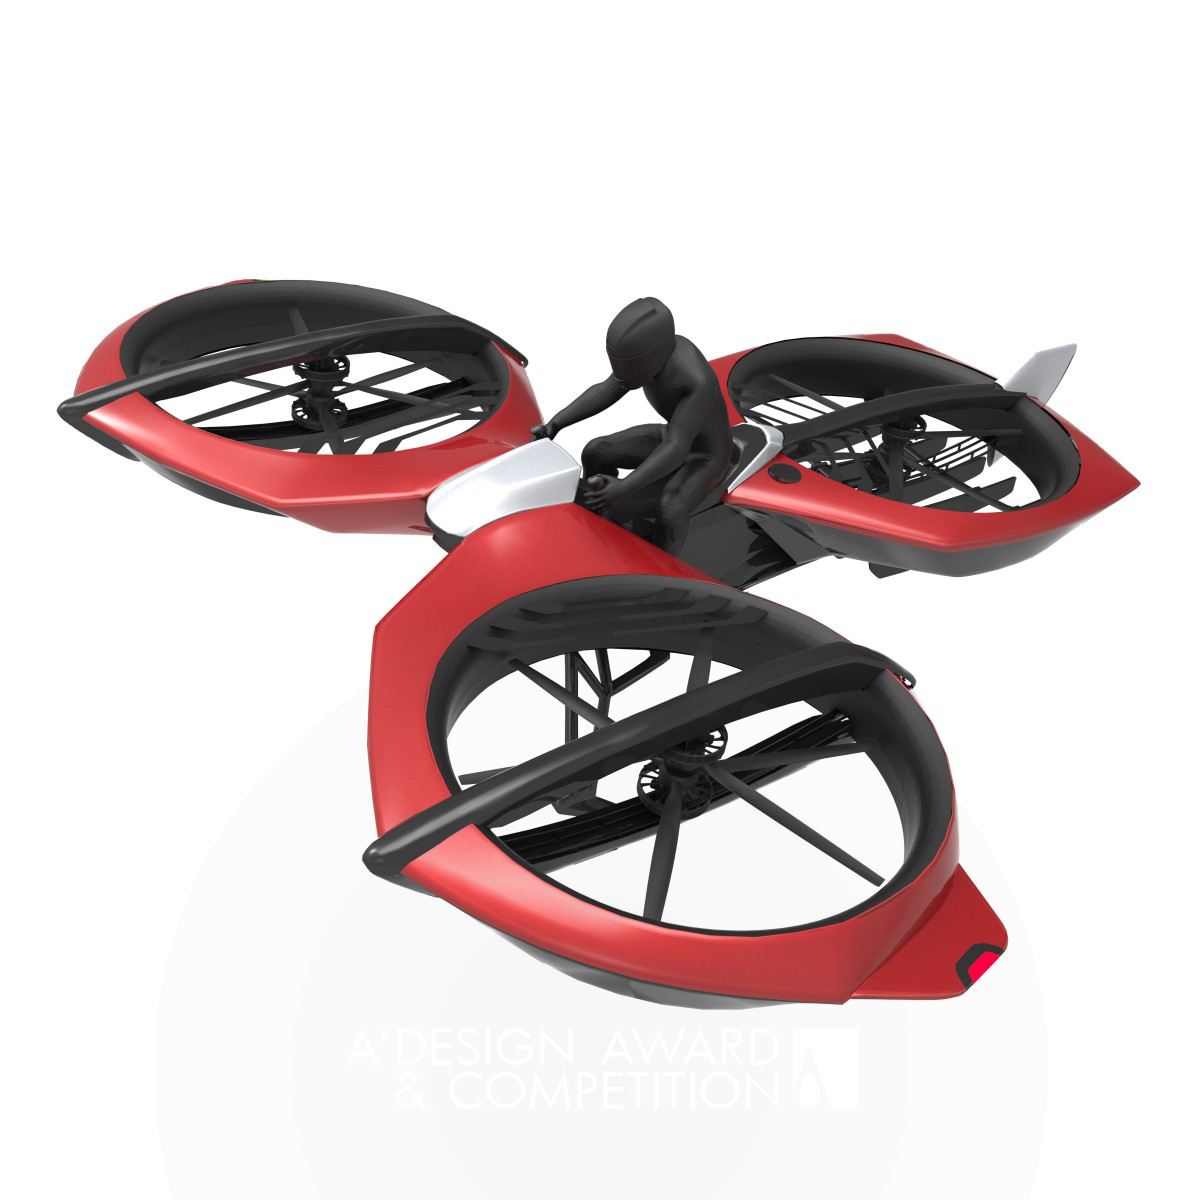 Flike <b> Passenger drone